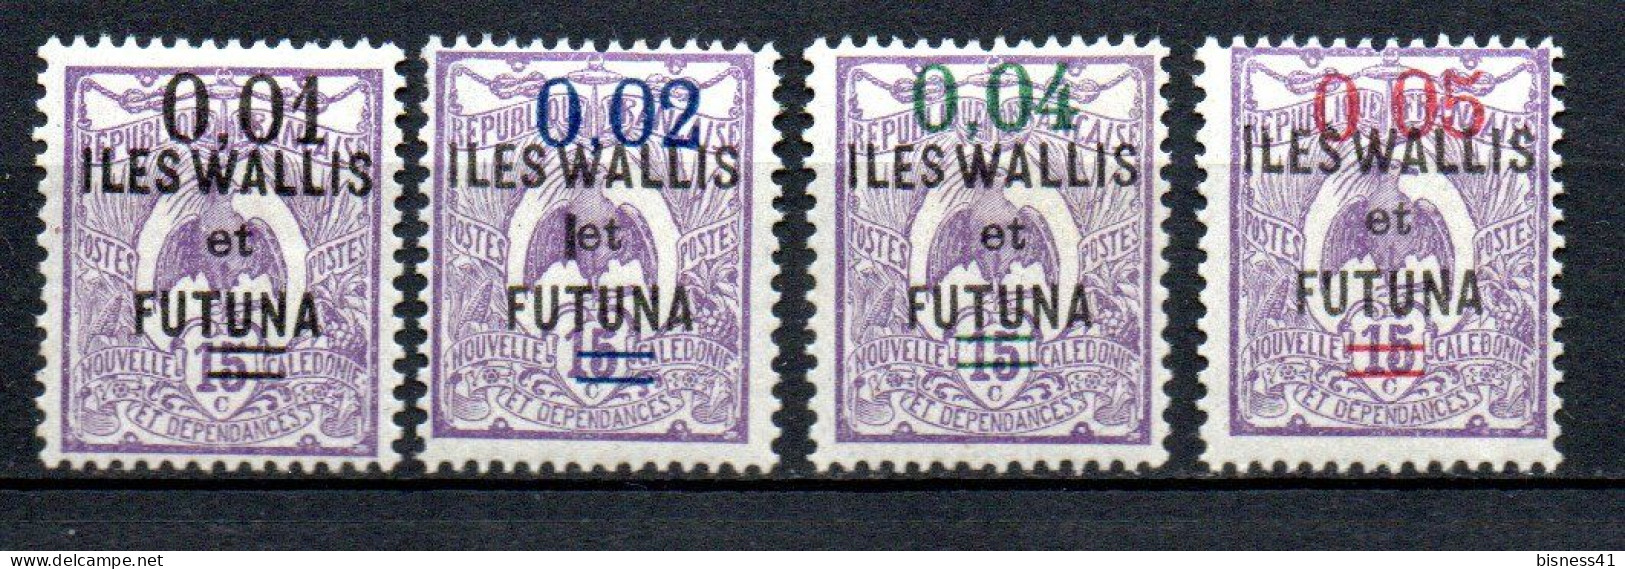 Col33 Colonie Wallis & Futuna N° 26 à 29 Neuf X MH Cote : 4,00€ - Nuovi